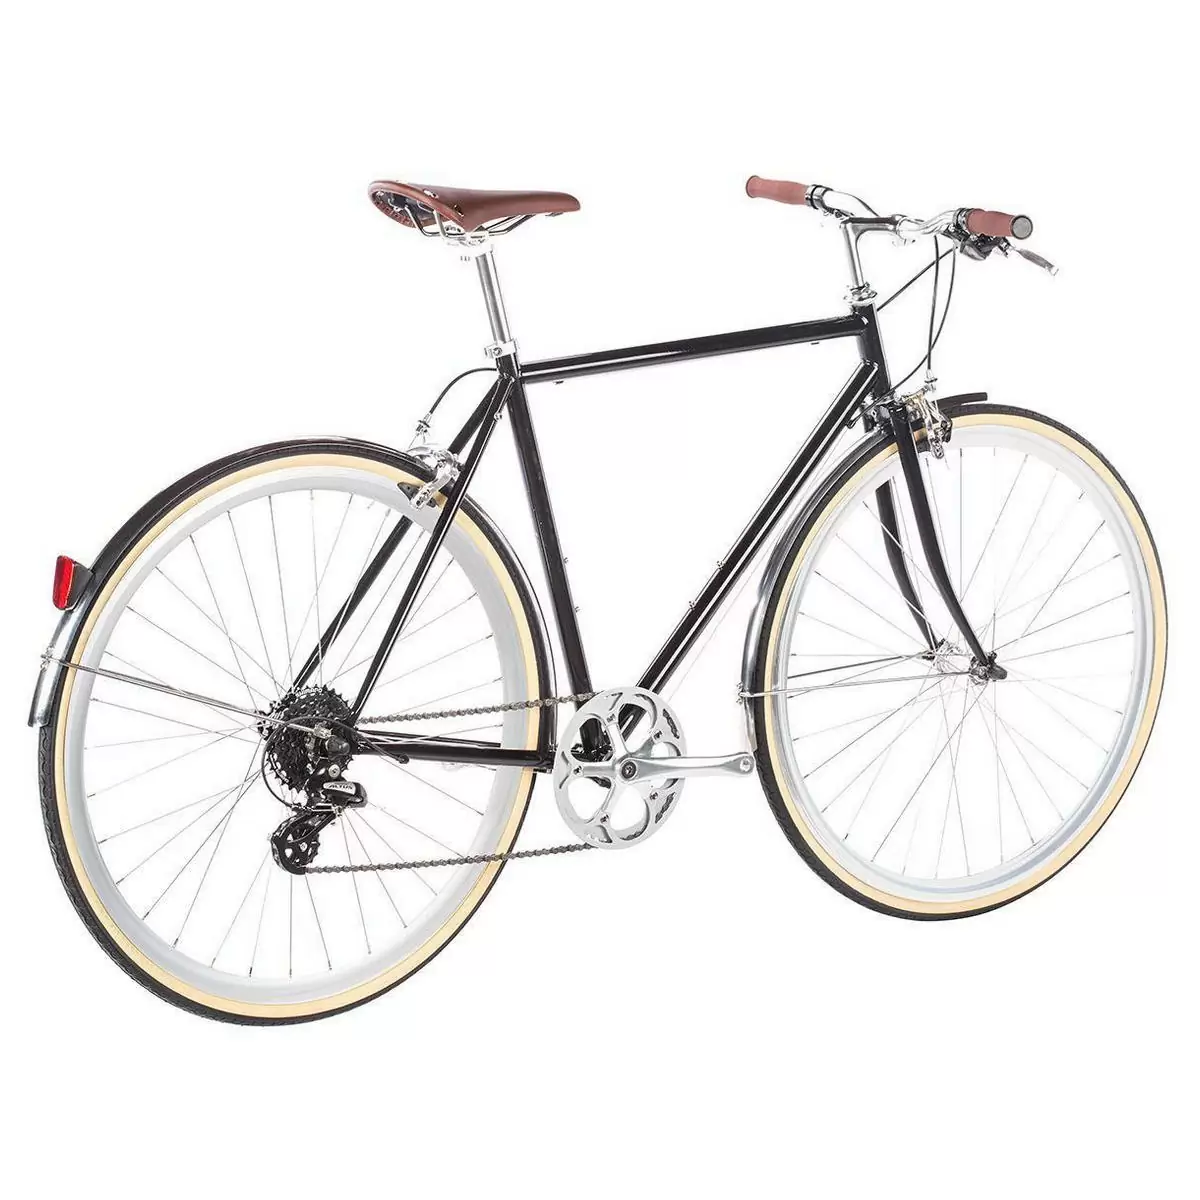 Bicicleta urbana ODYSSEY 8spd Delano preta grande 58cm #2